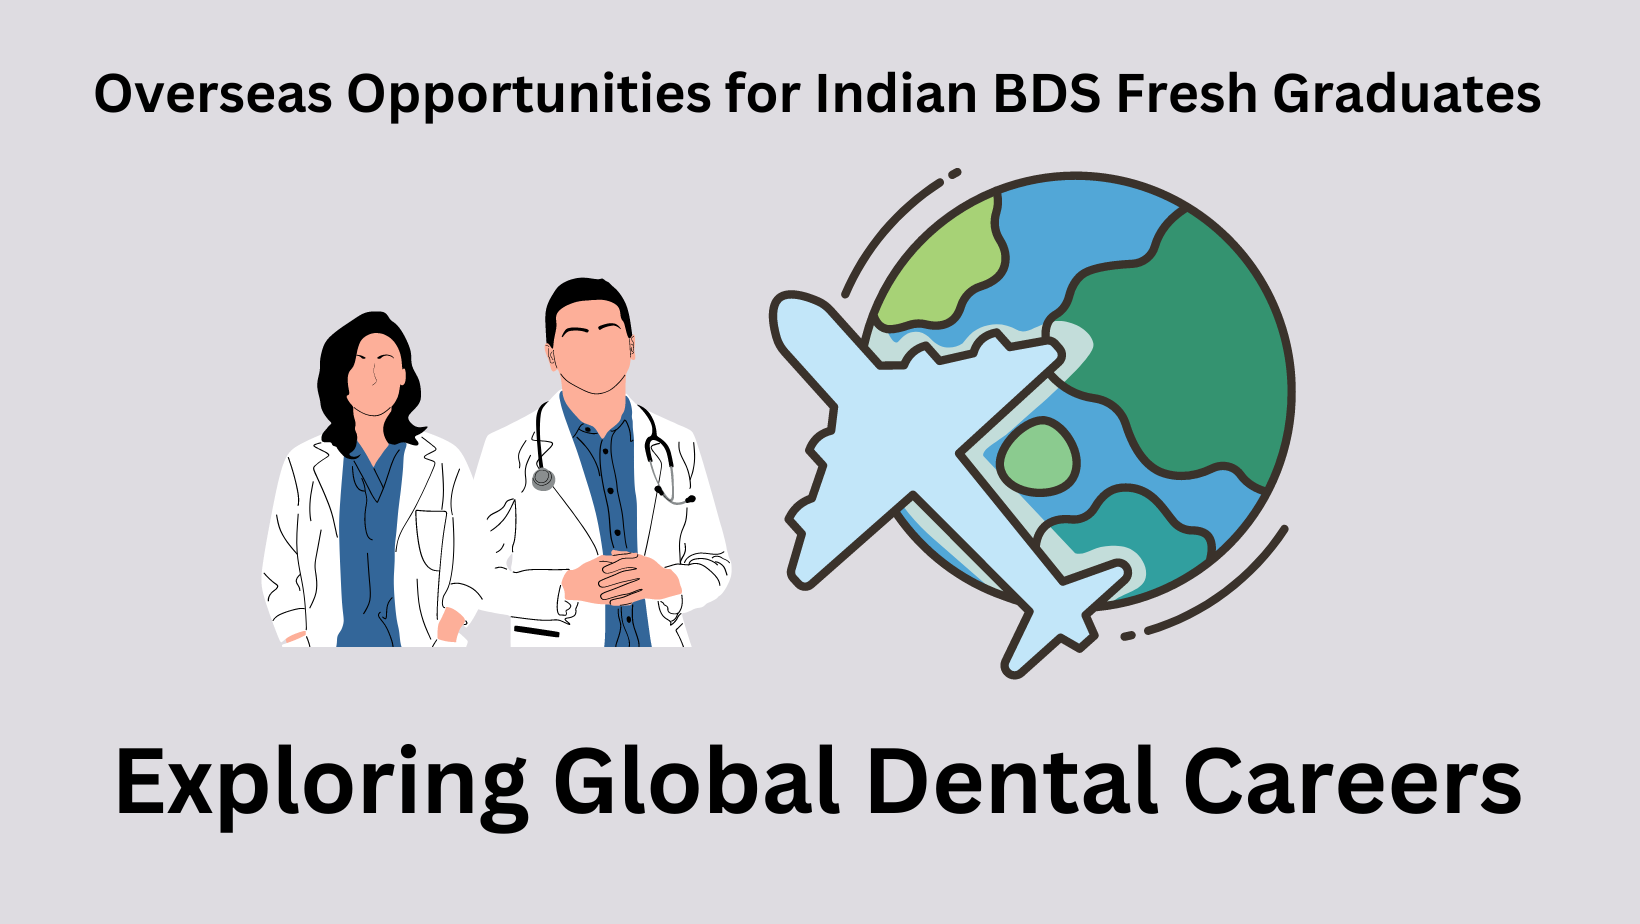 Overseas Opportunities for Indian BDS Fresh Graduates: Exploring Global Dental Careers